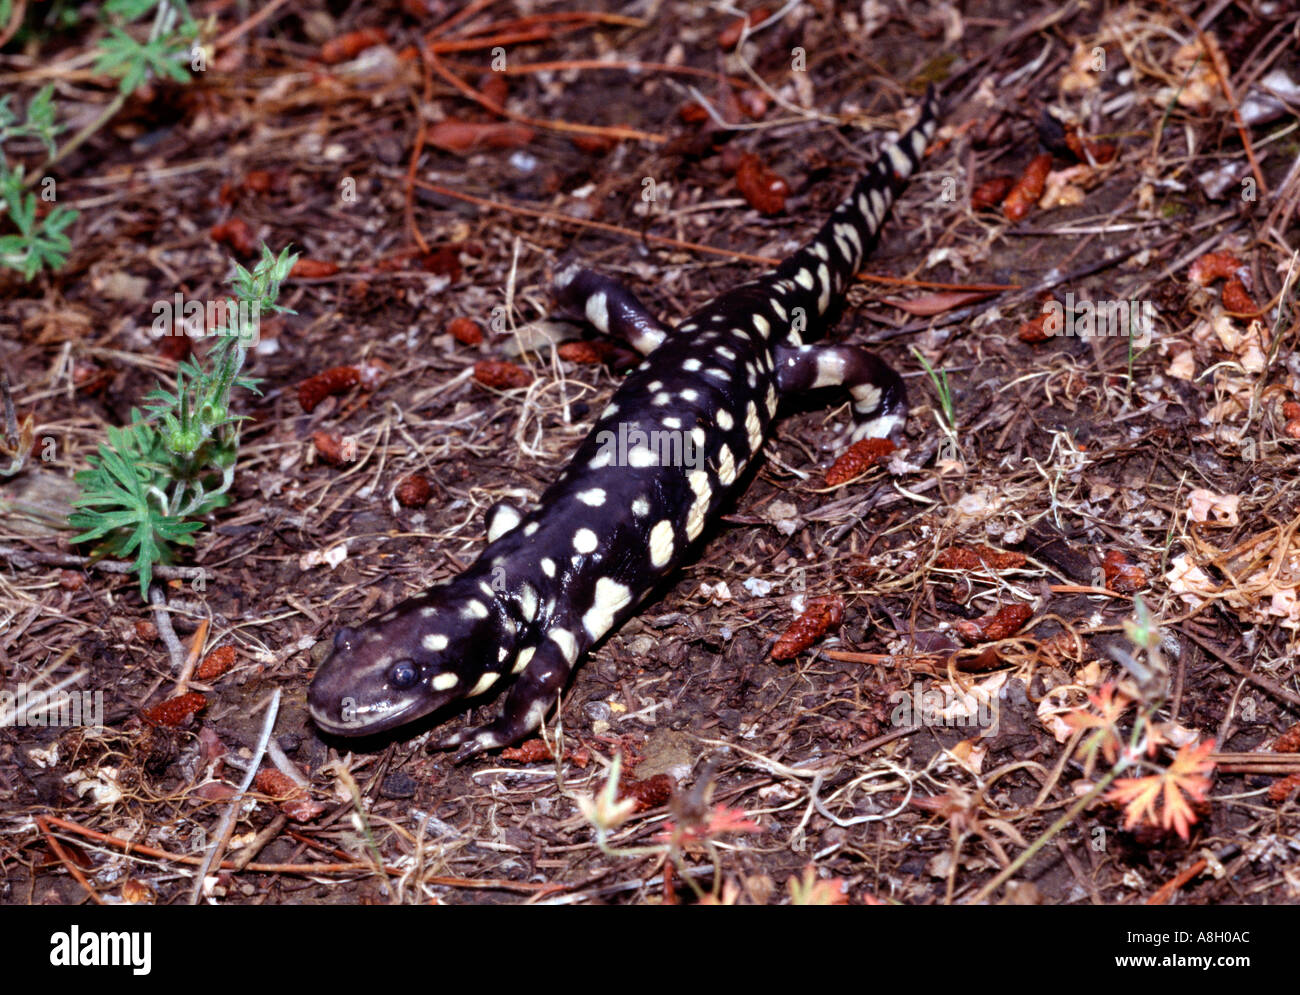 24795 Tiger salamander Ambystoma tigrinum Santa Cruz Mountains California USA Stock Photo